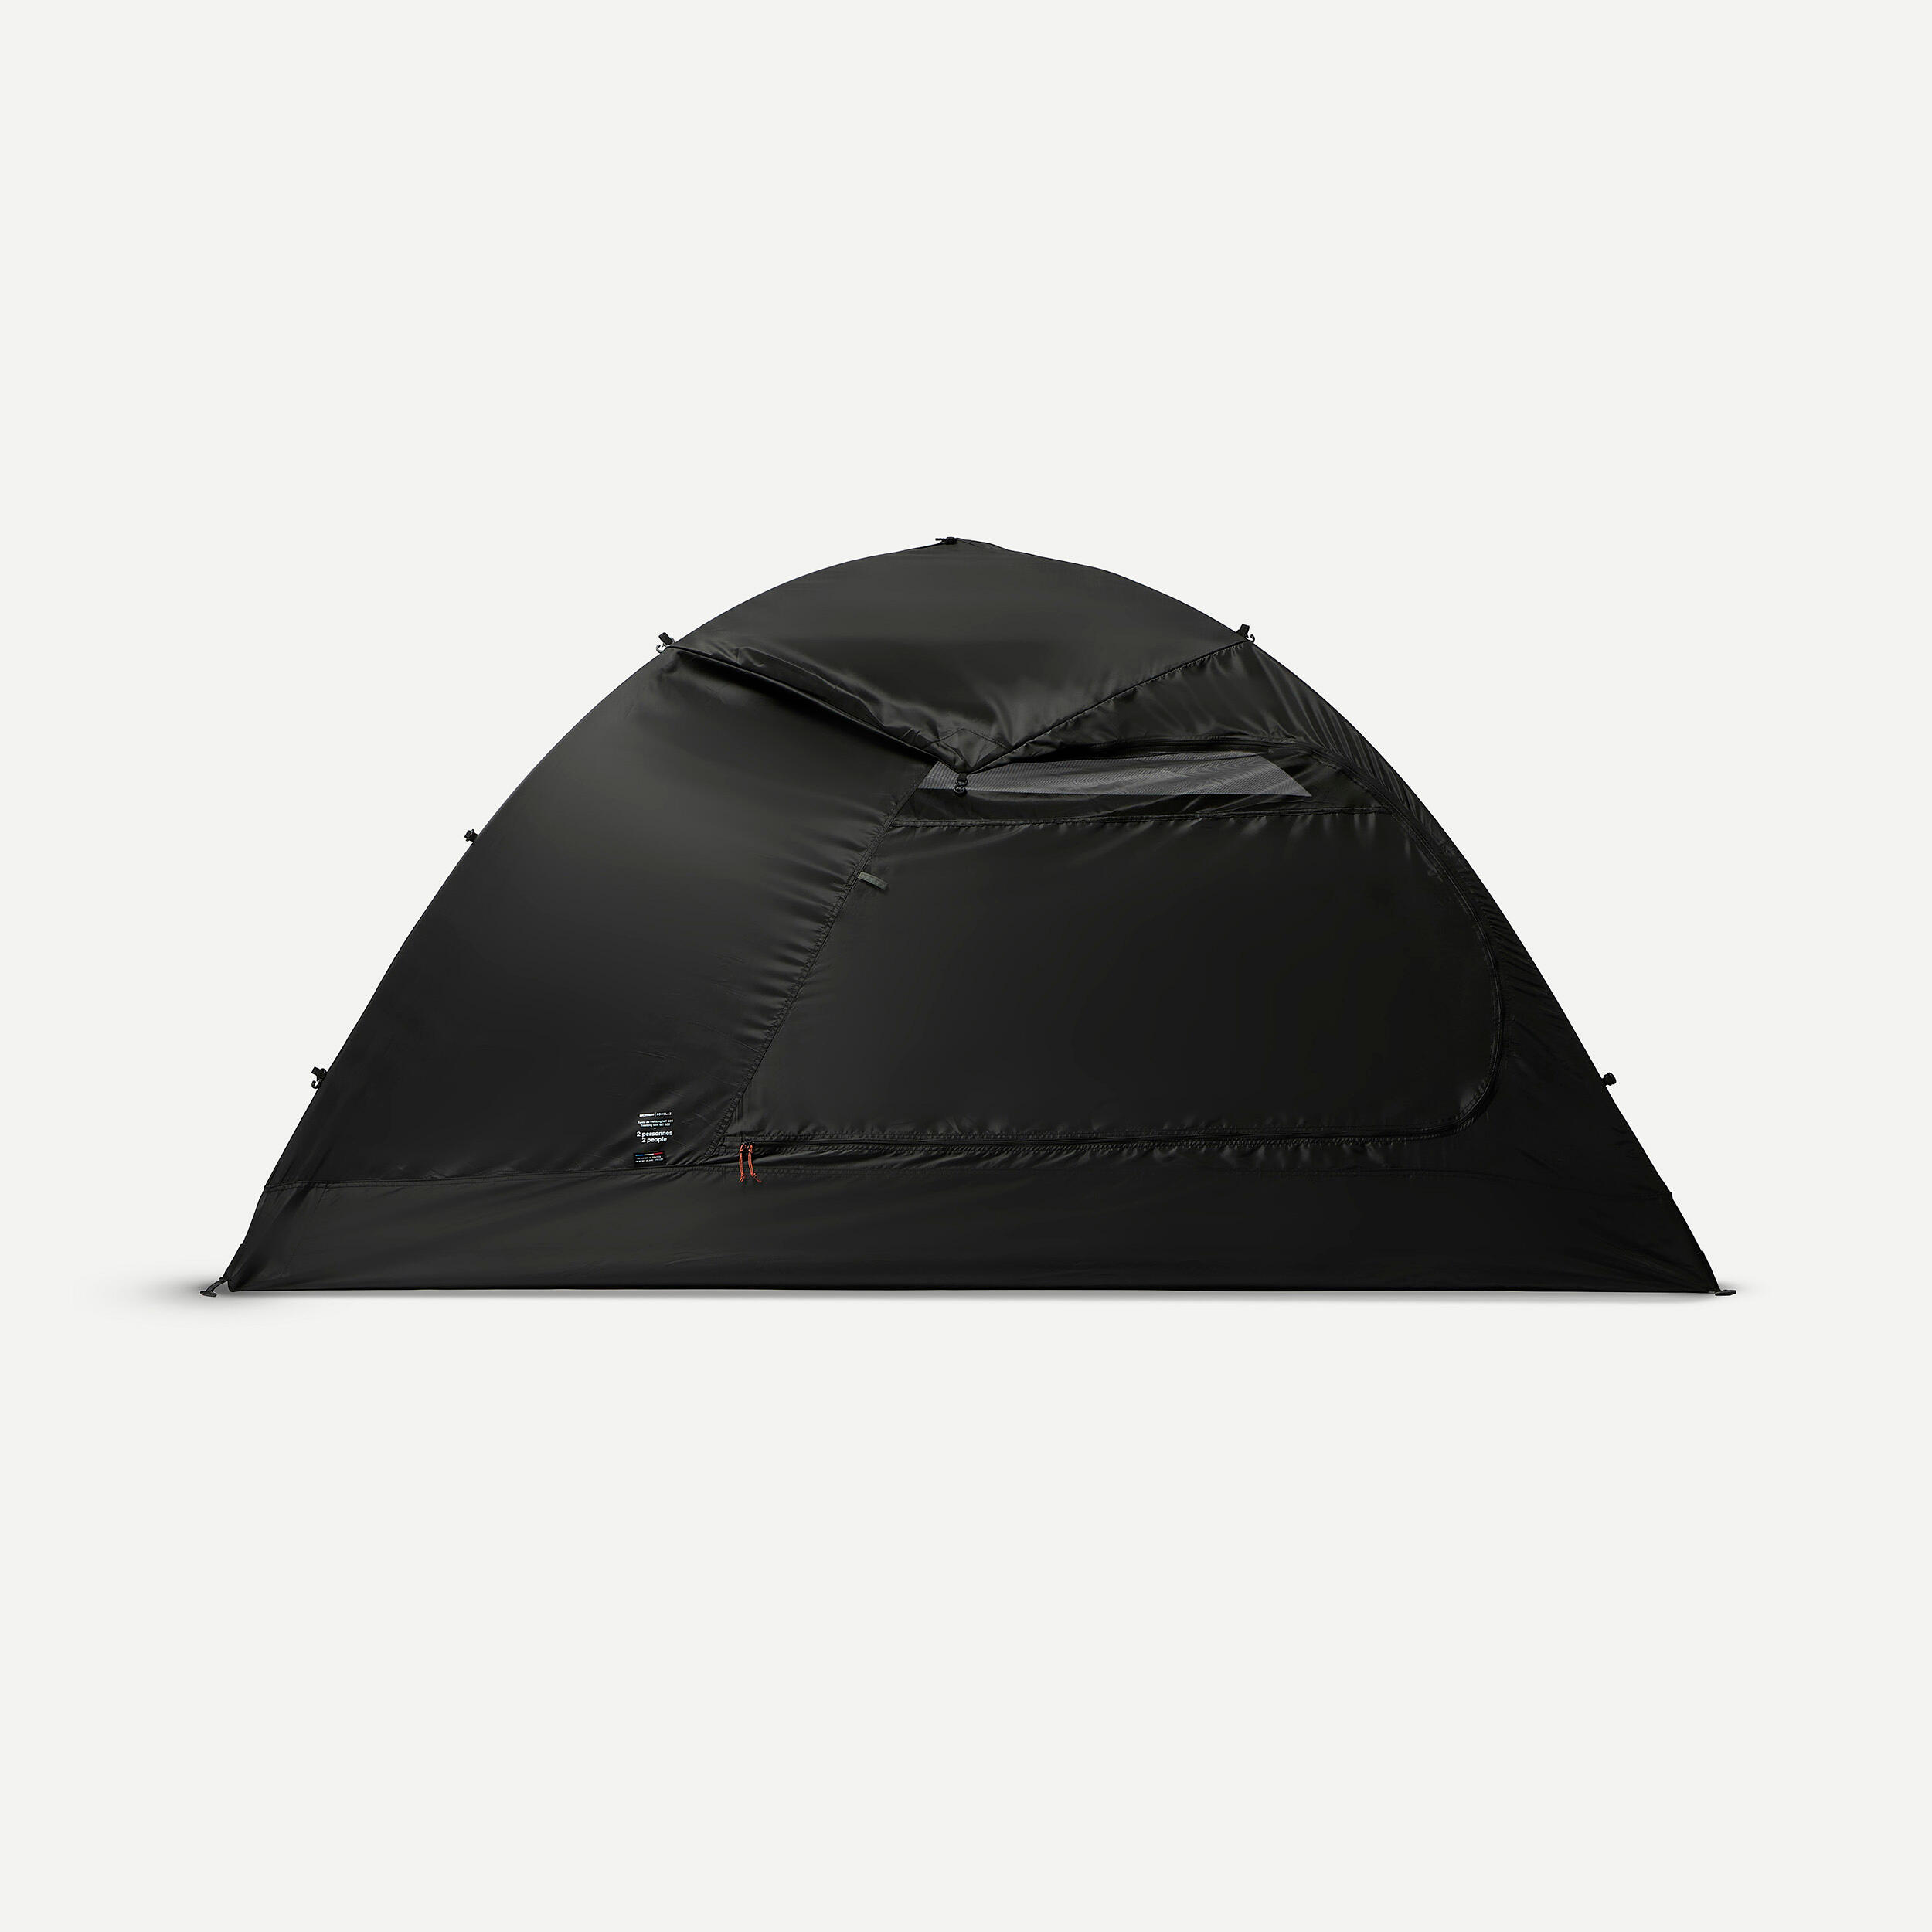 Trekking dome tent - 2-person - MT500 4/7